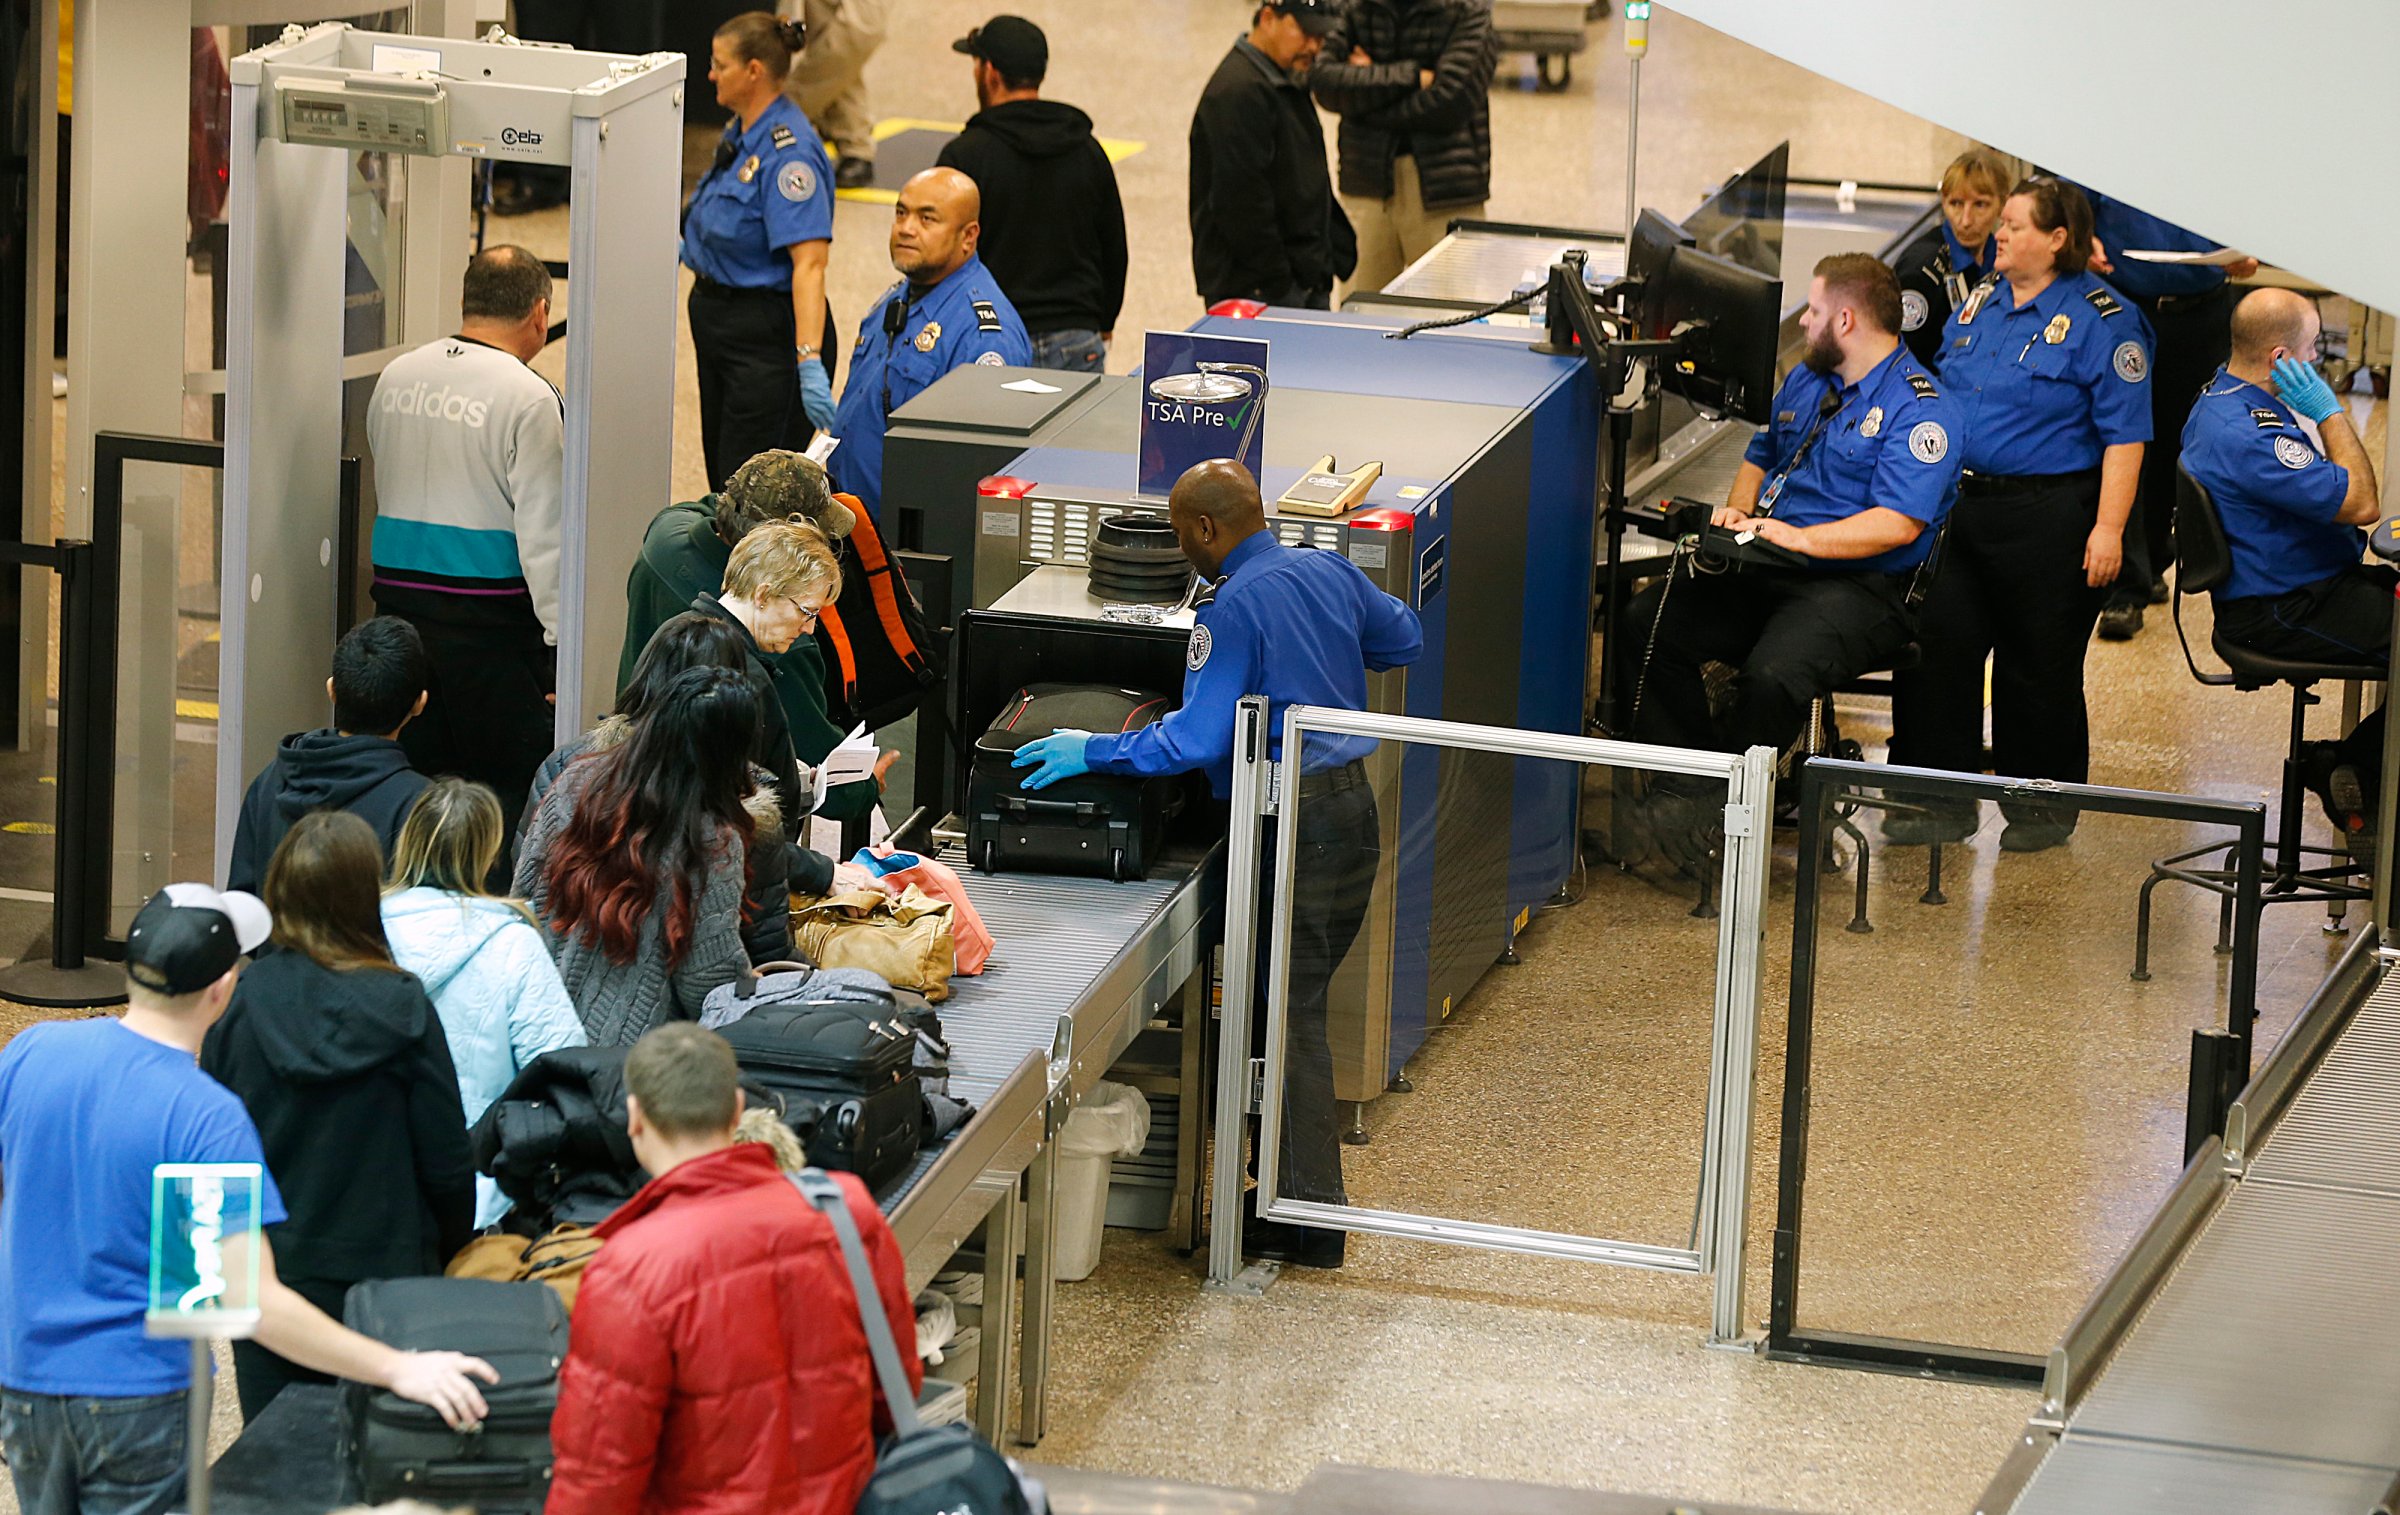 Passengers make their way through a Transportation Security Administration checkpoint at Salt Lake City International Airport in Salt Lake City, Utah on Dec. 23, 2014.